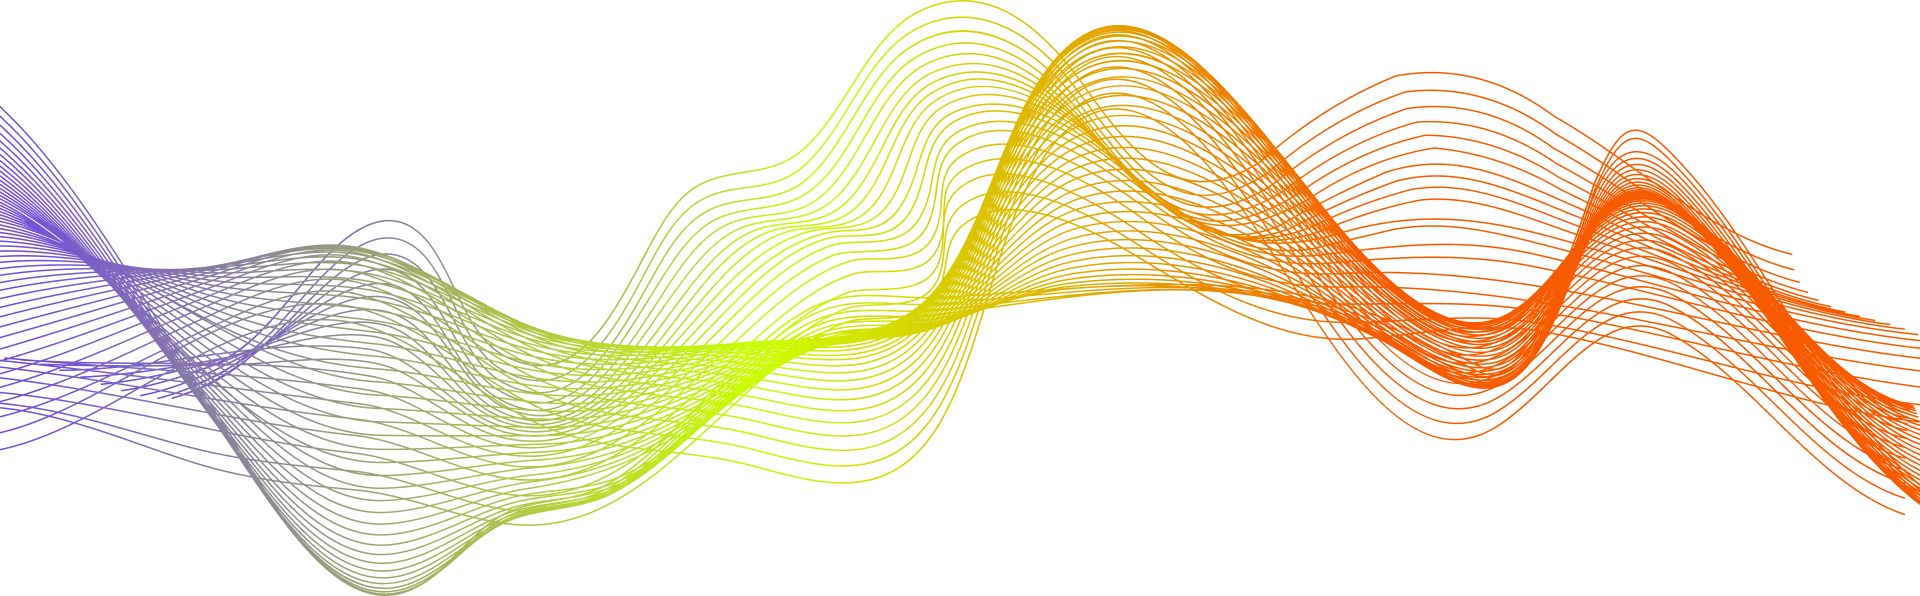 Colourful wave visualization background